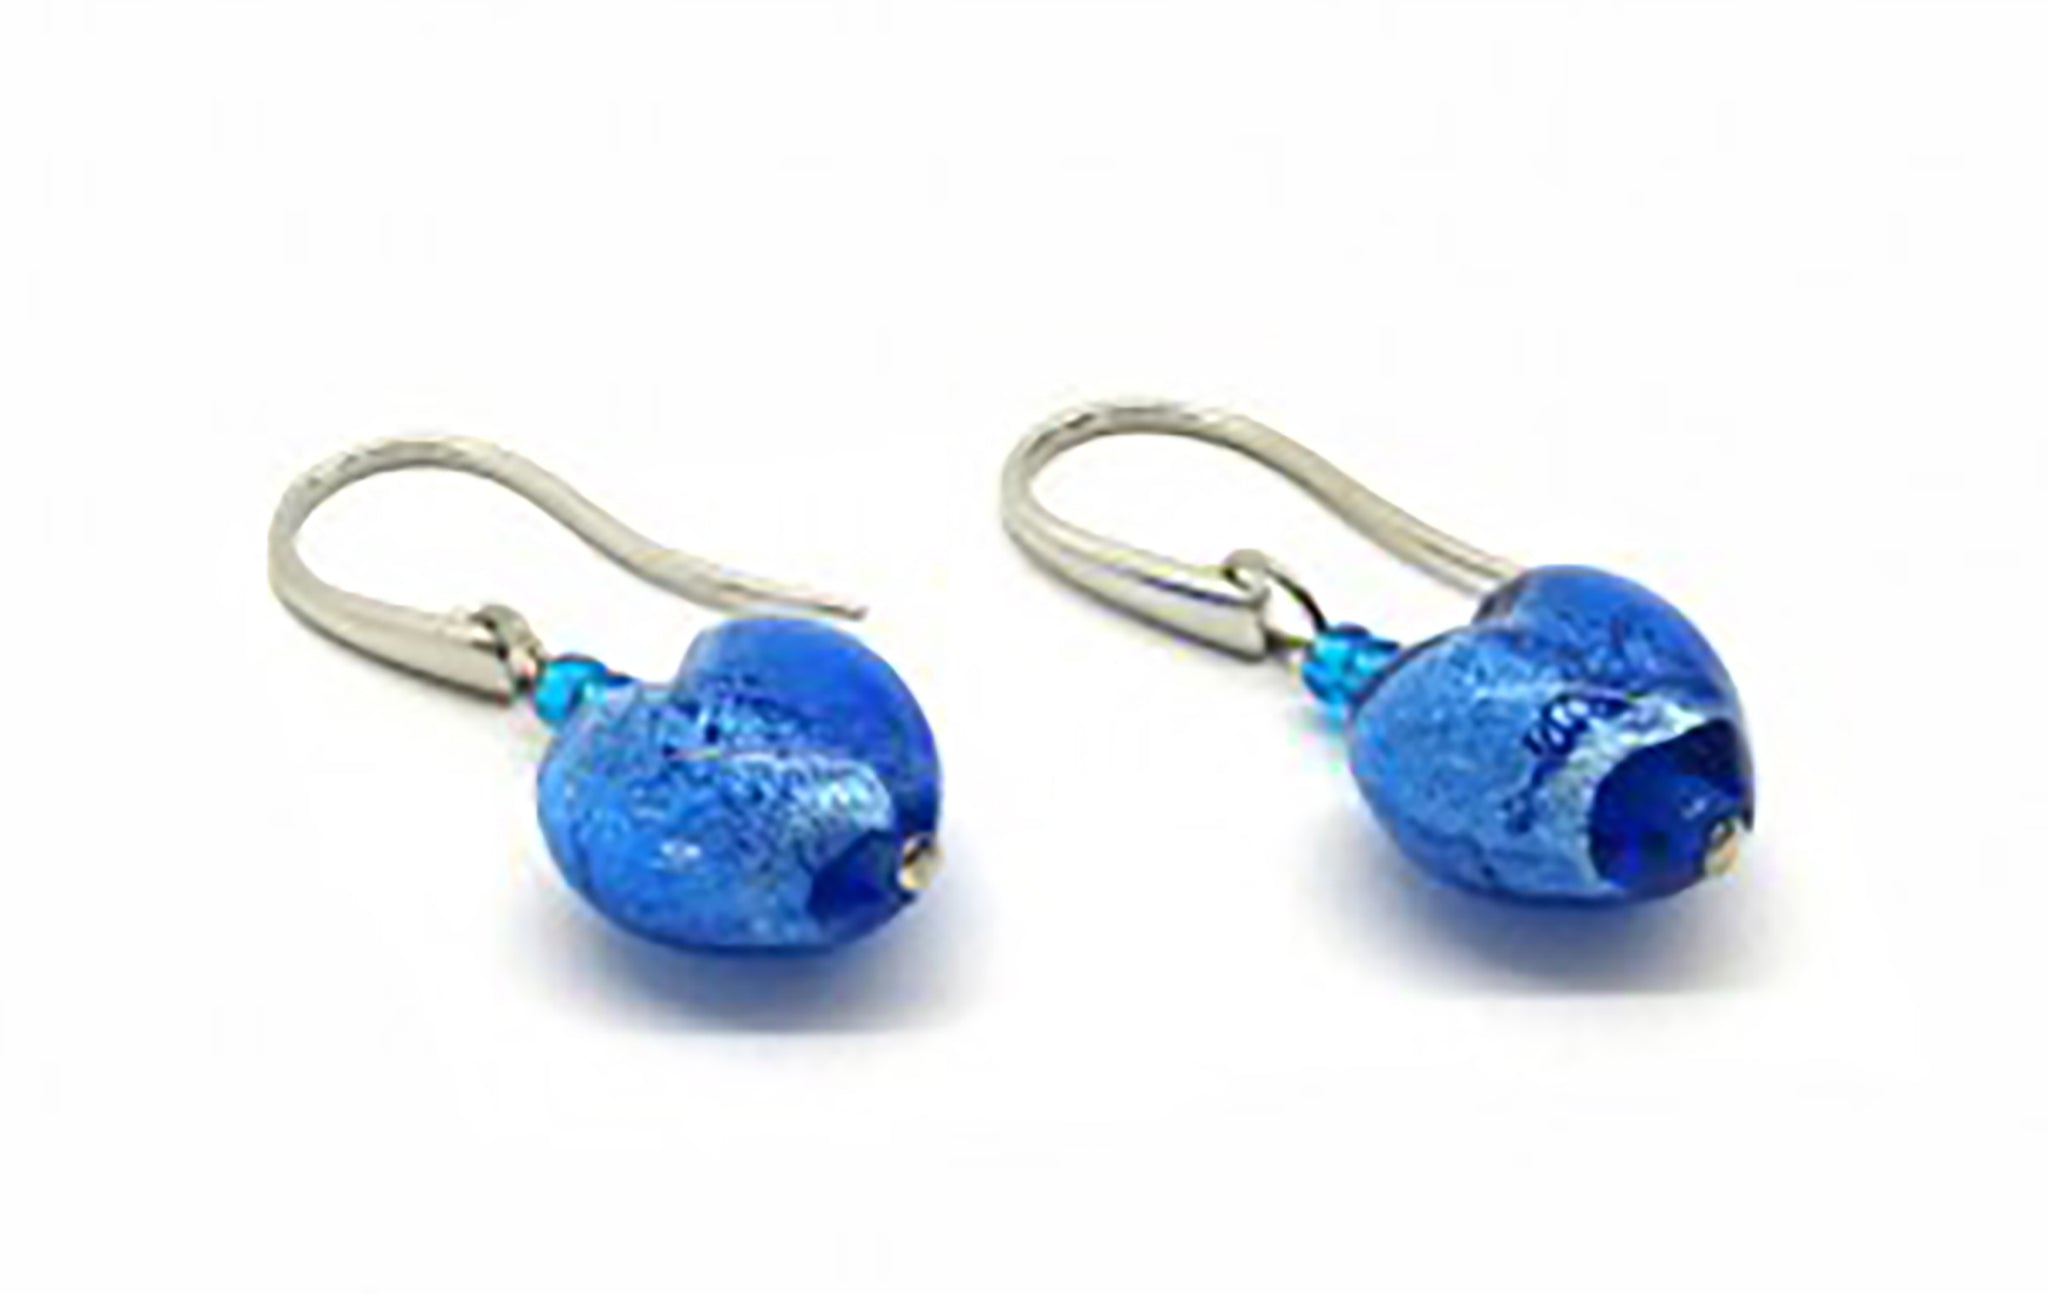 Murano Glass Earrings - Heart Shaped - Mod. Giulia, 12 mm - Blue - Sterling Silver